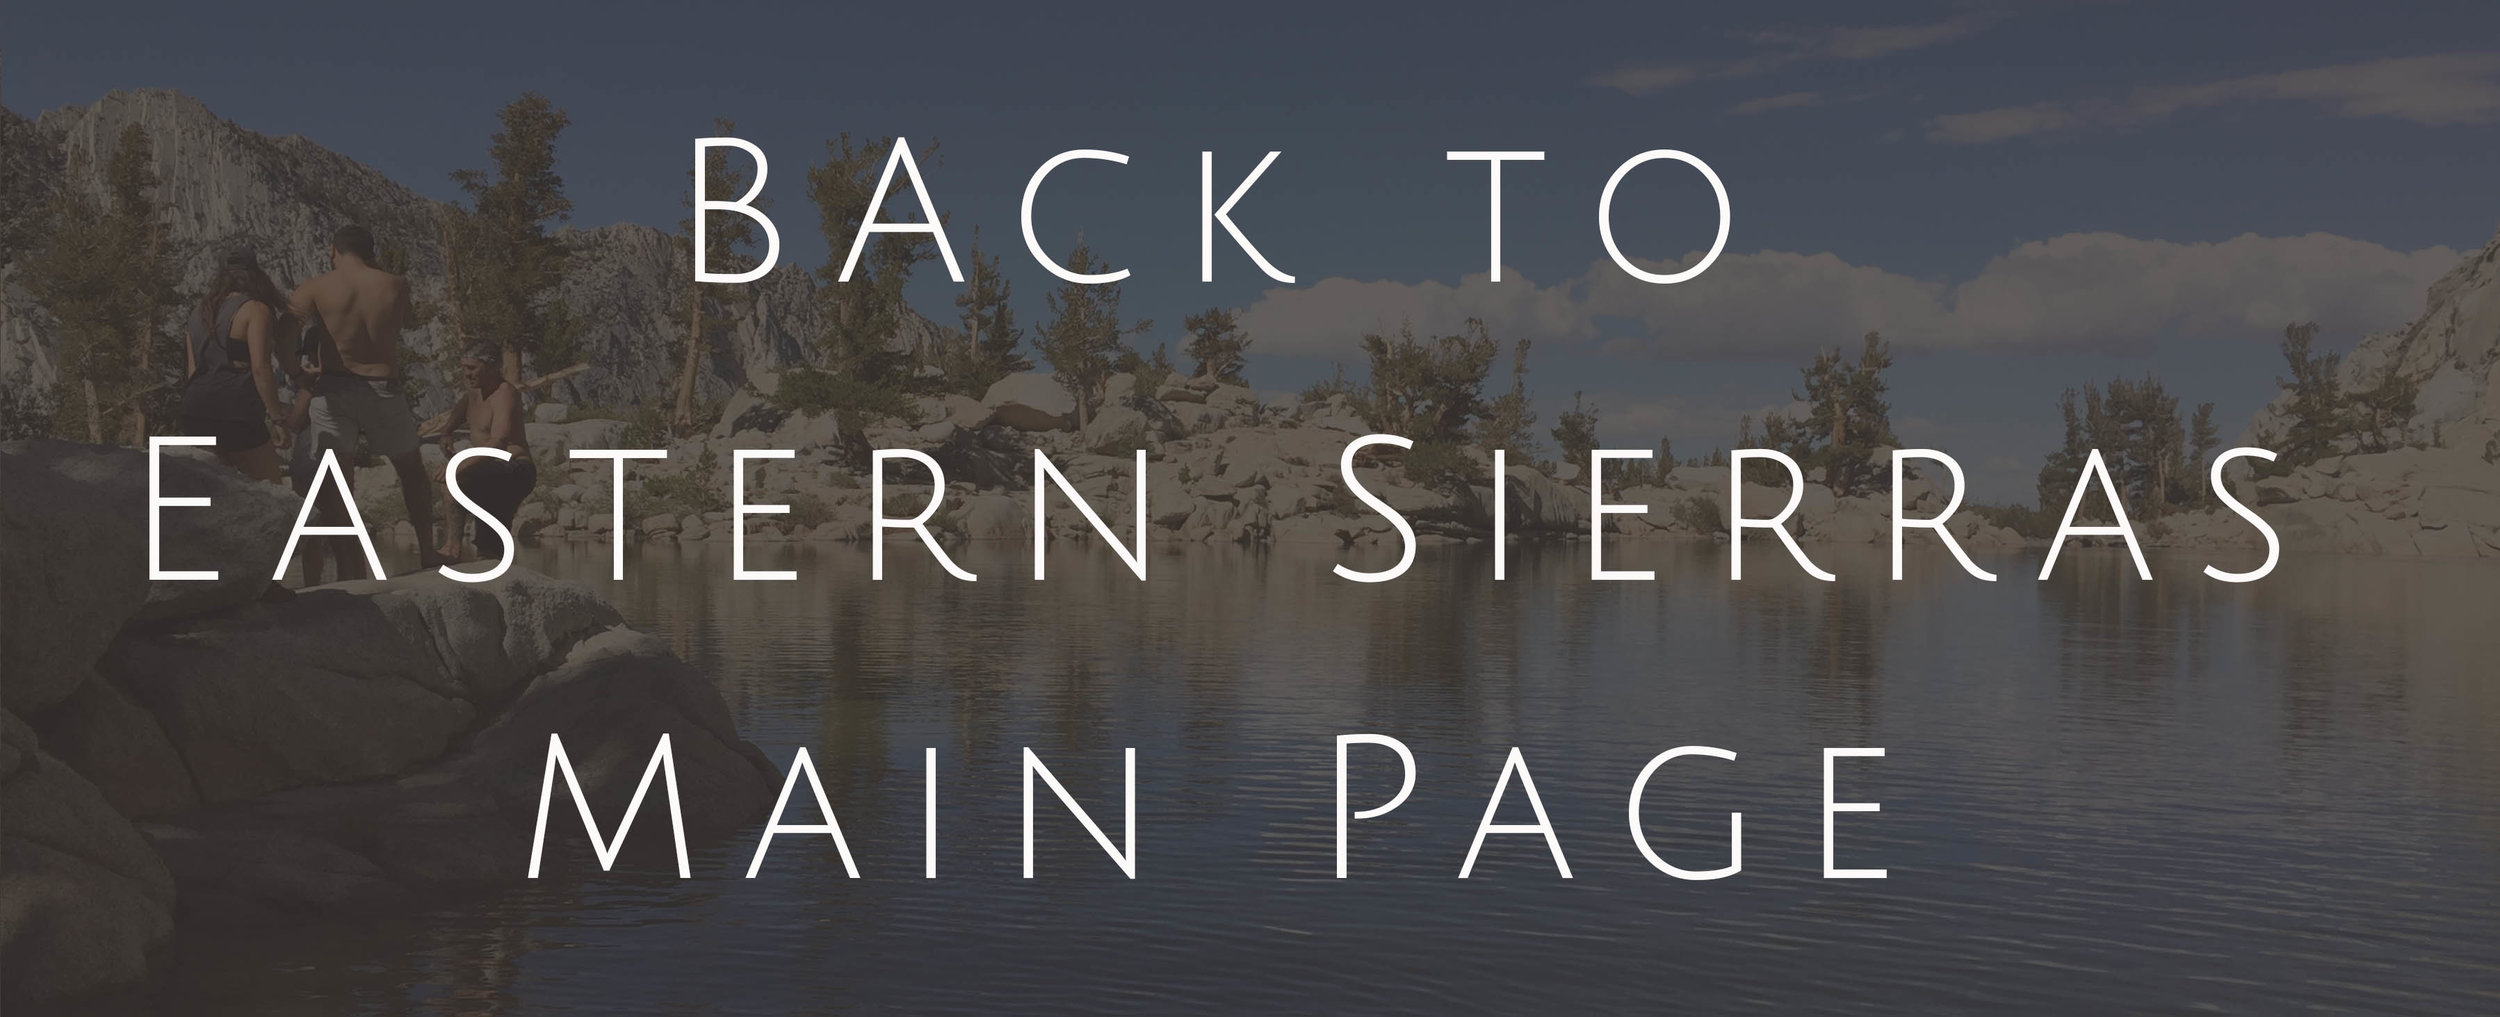 Back to Eastern Sierras Main Page 2.jpg